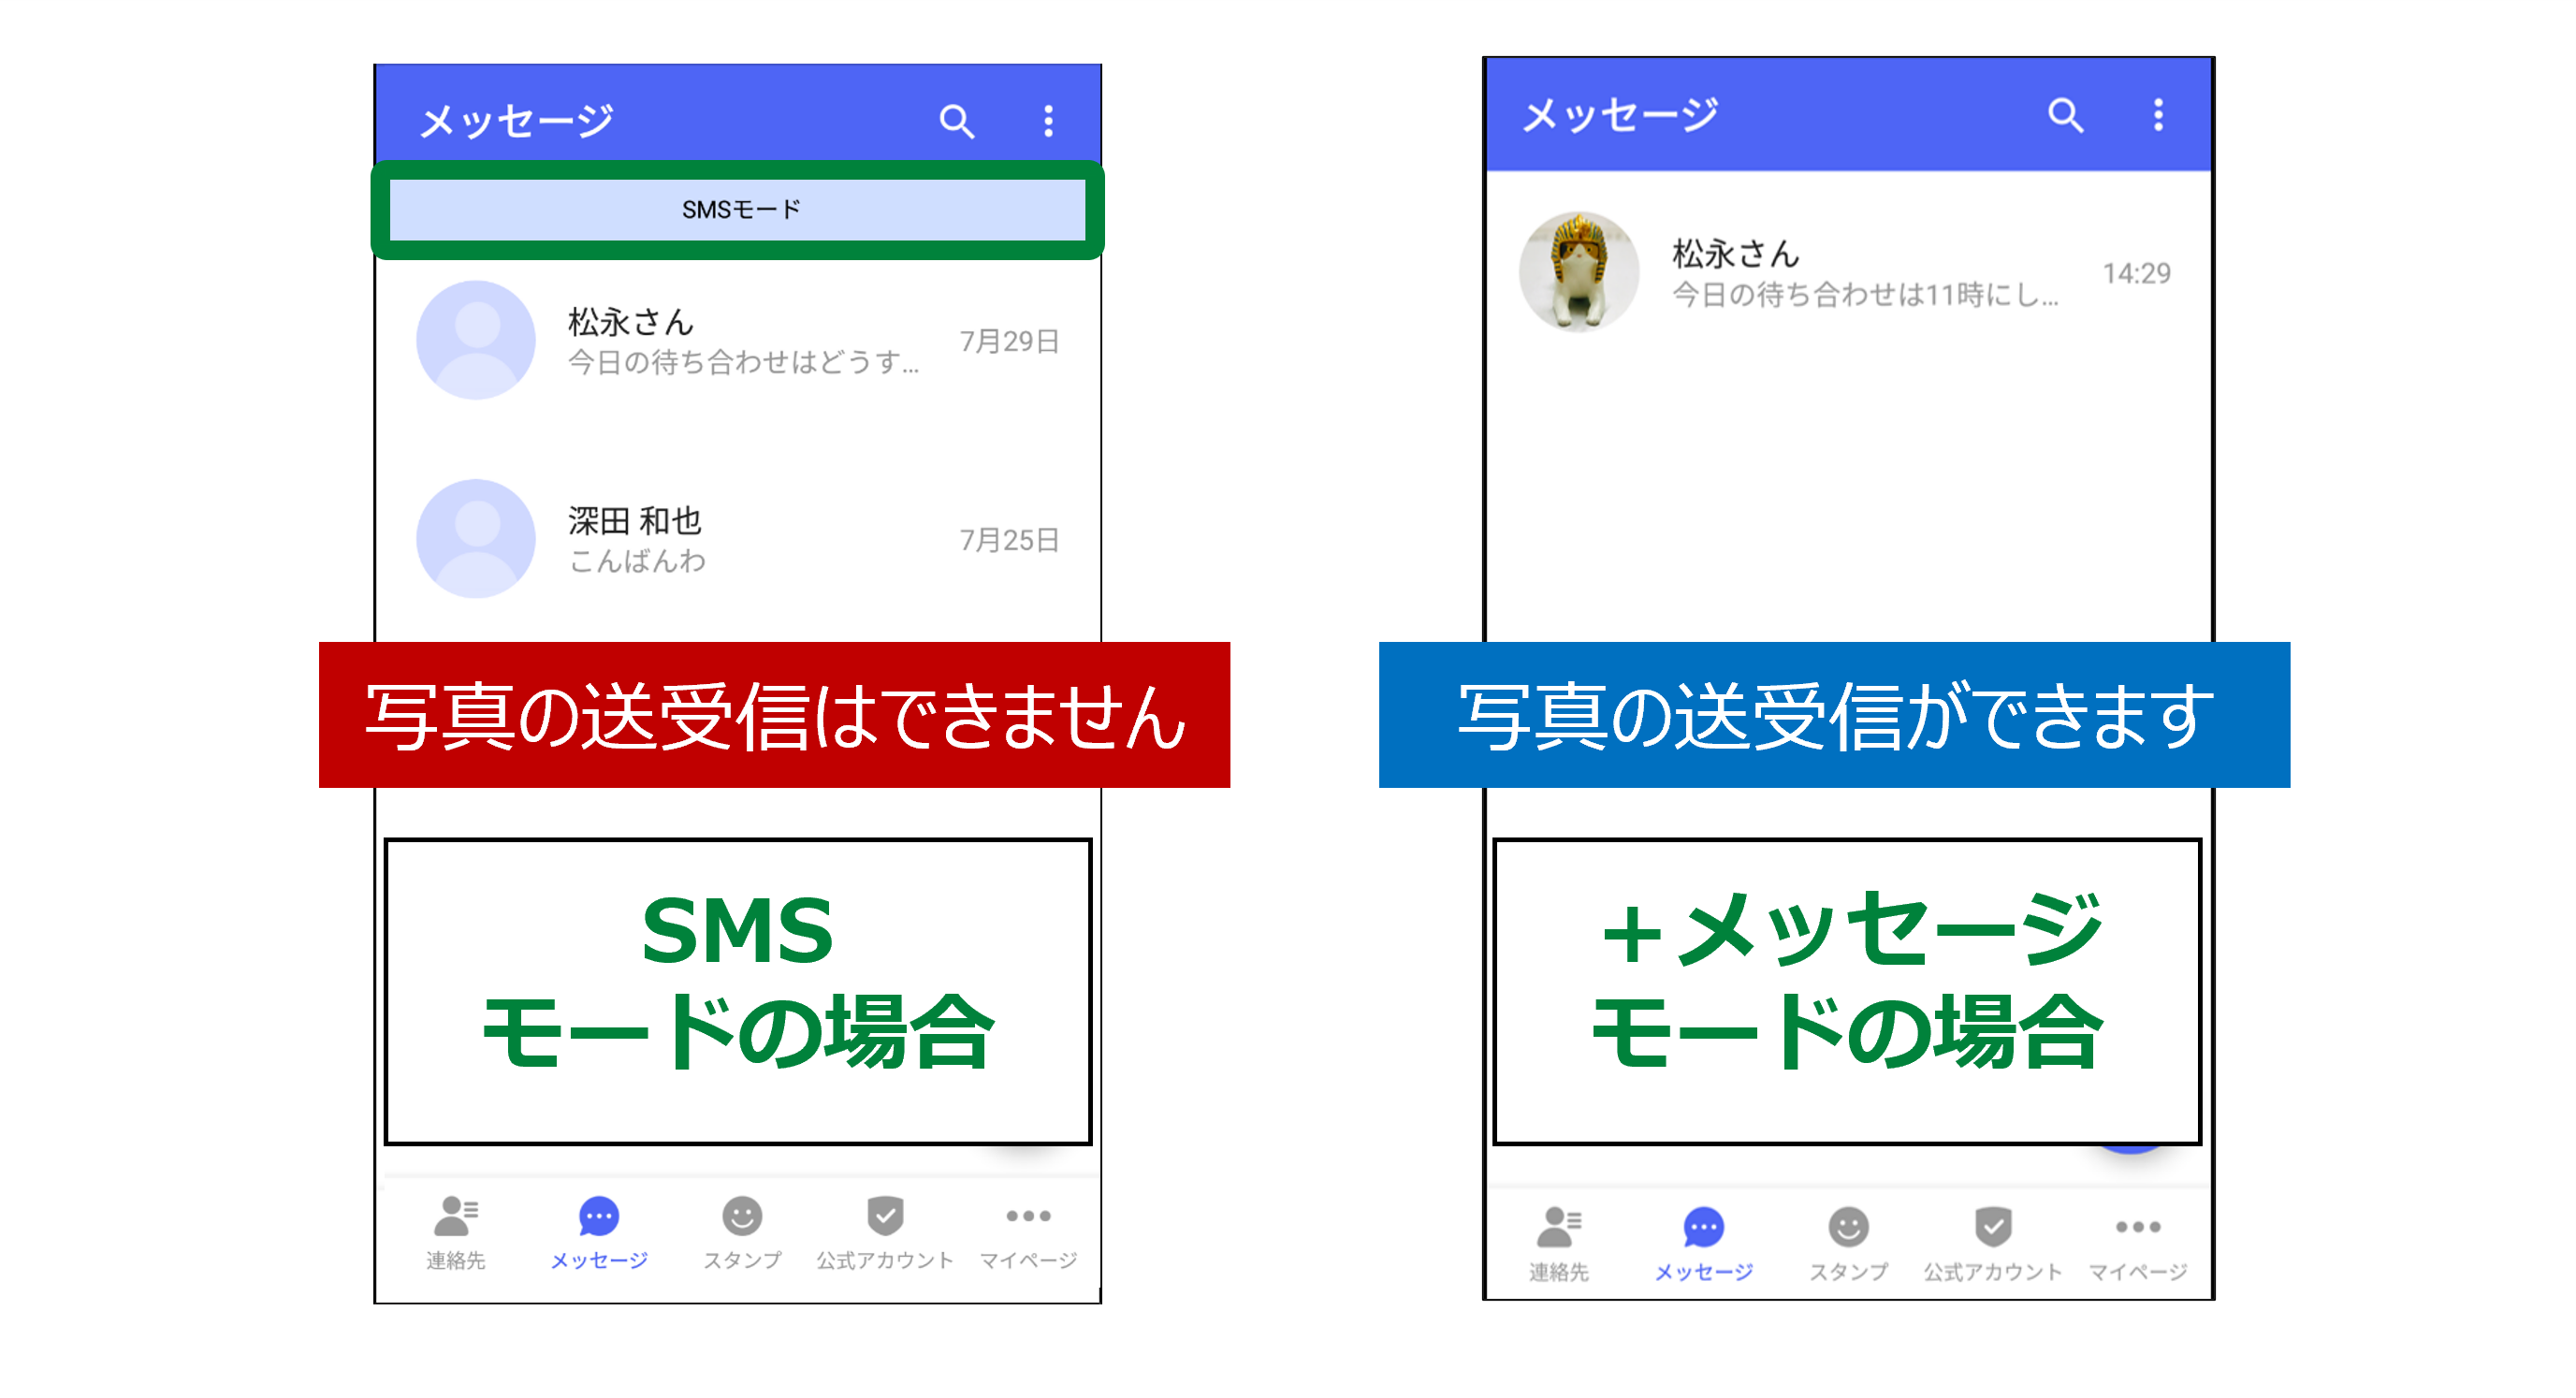 SMSモードと＋メッセージモードの画像対比